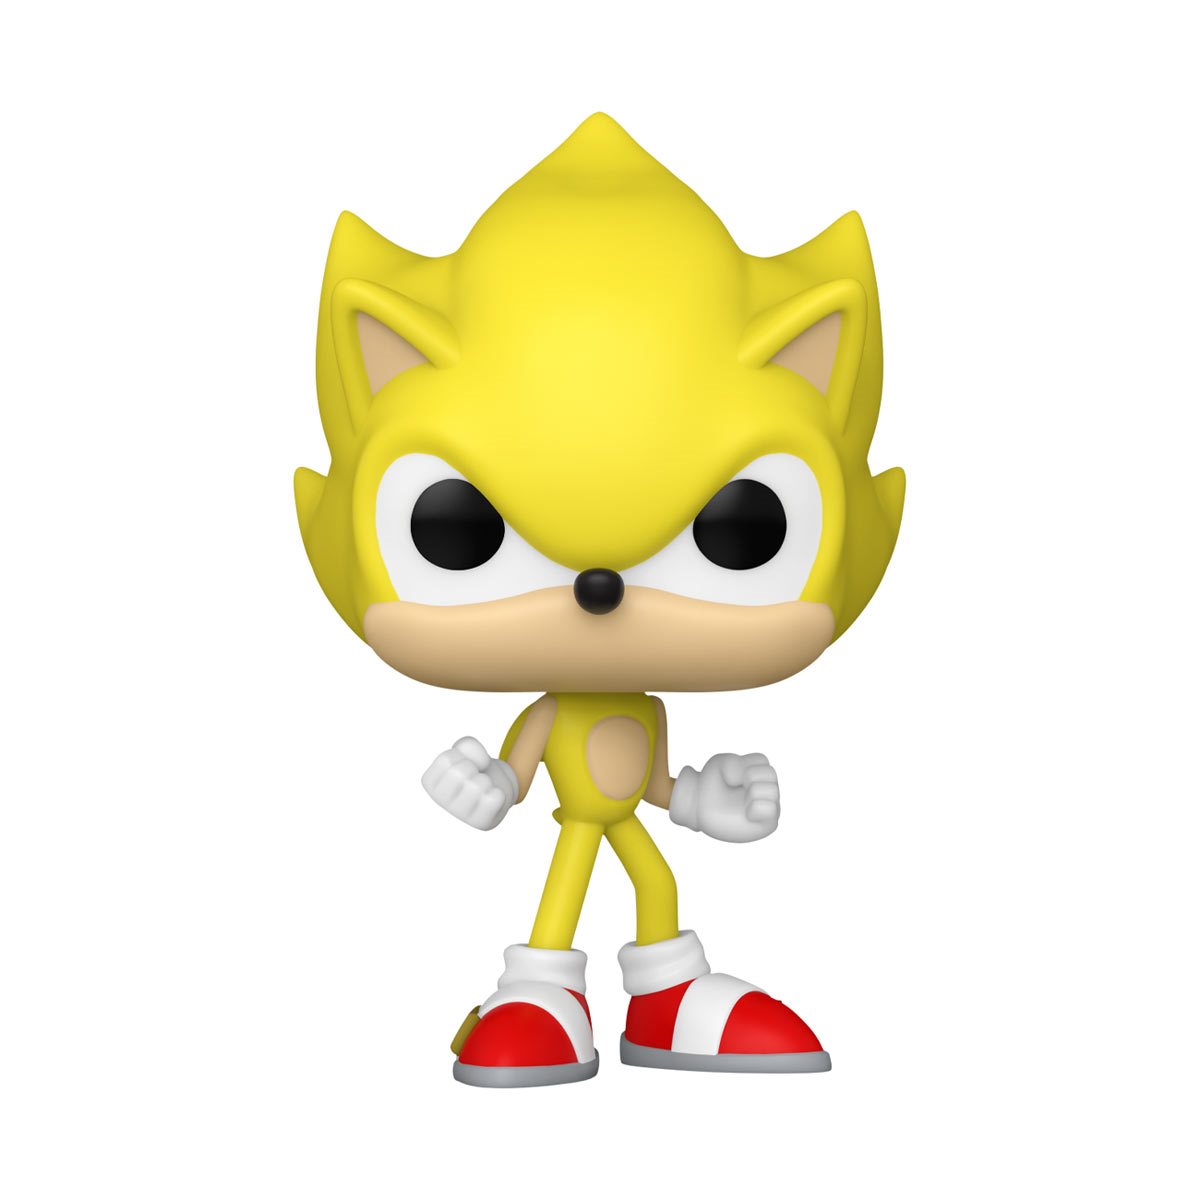  Funko Pop! Sonic The Hedgehog Super Silver and Super